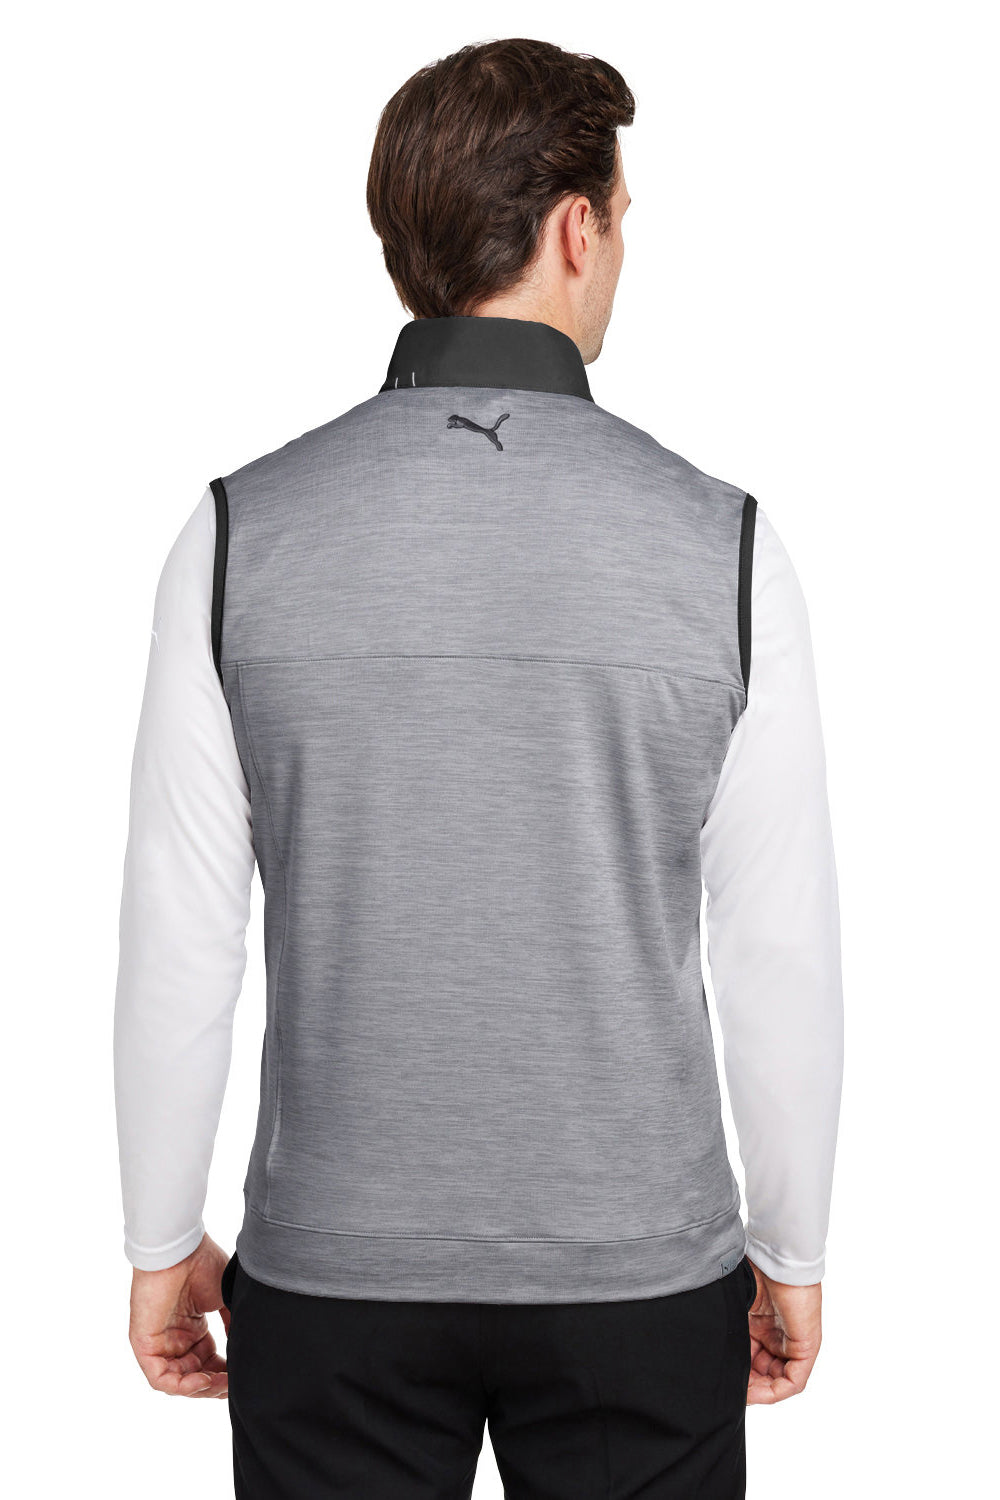 Puma 537465 Mens Cloudspun Colorblock Full Zip Vest Black/Quiet Shade Grey Back